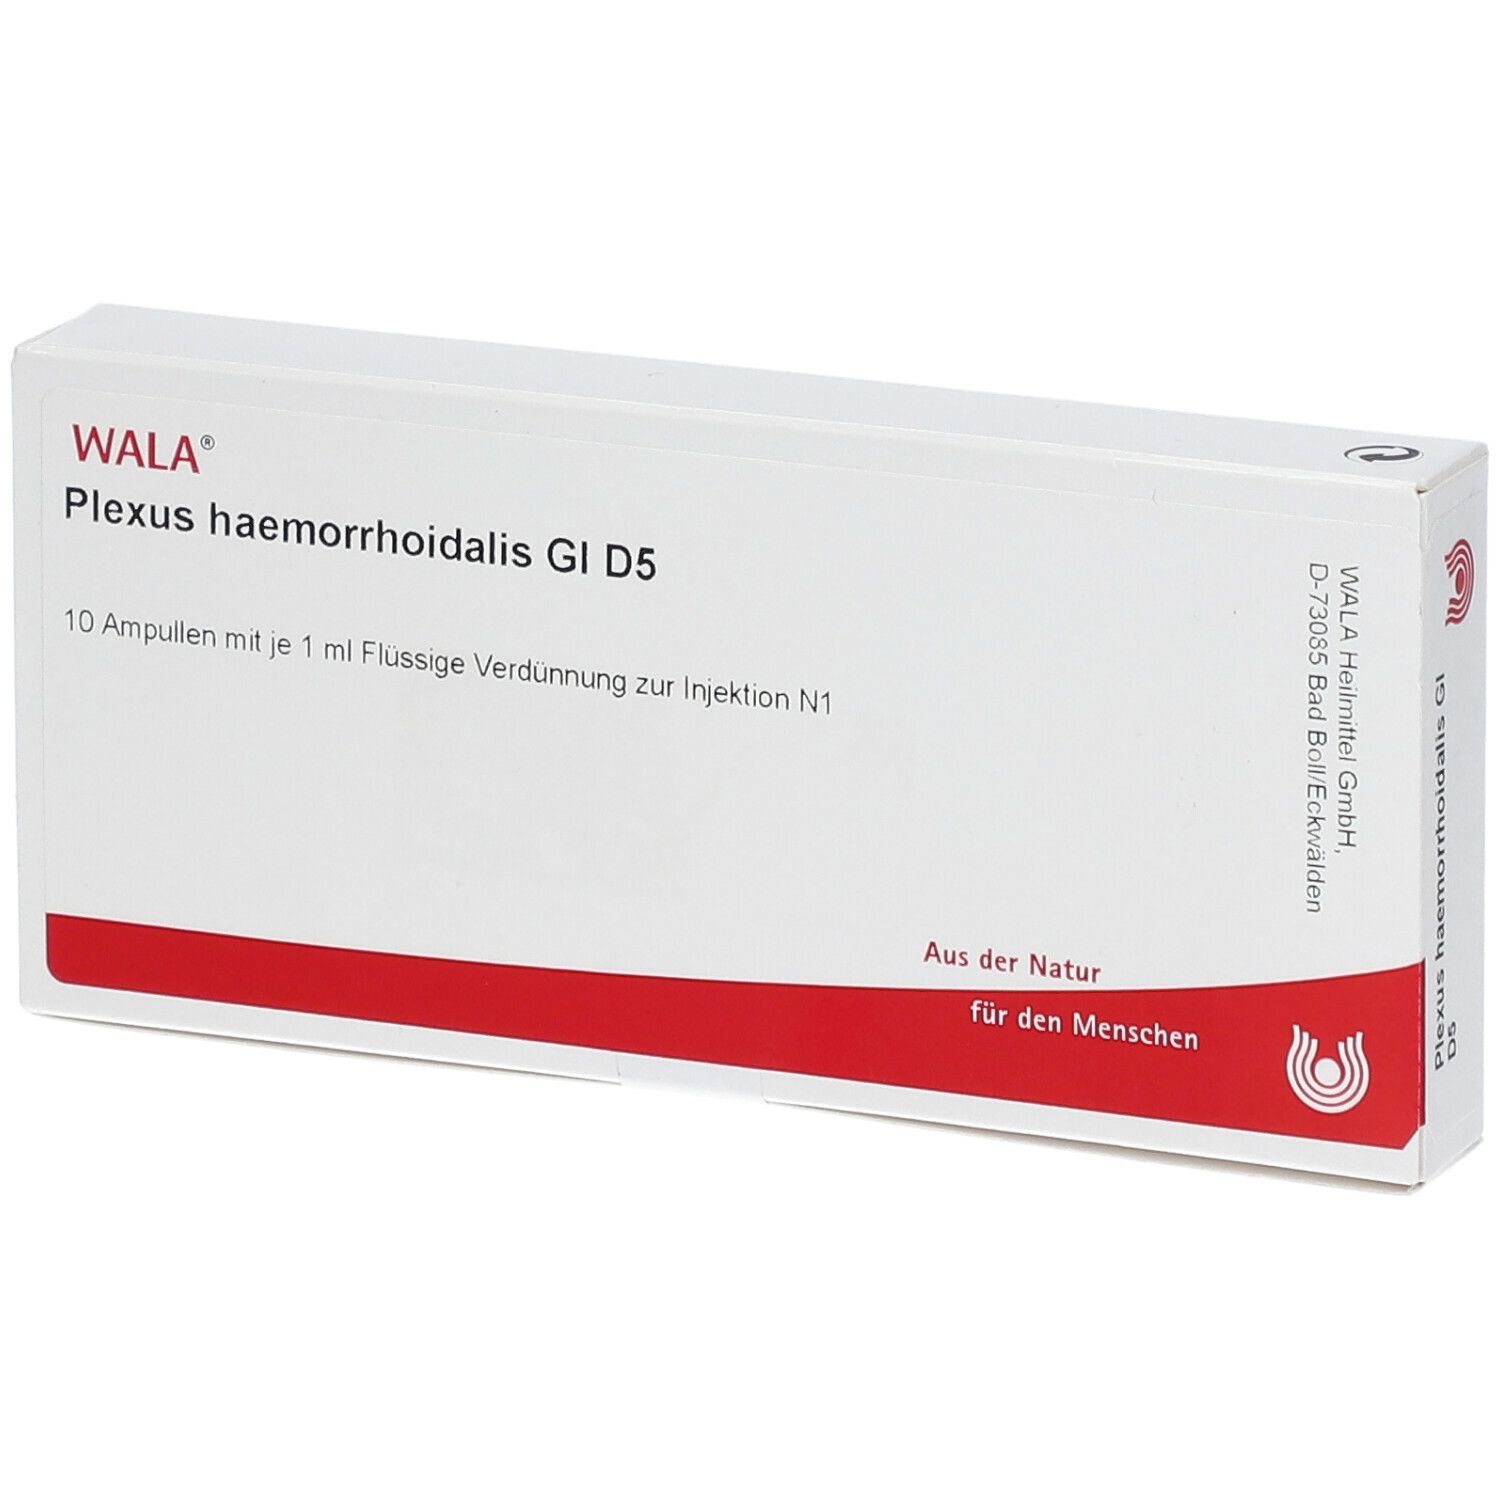 WALA® Plexus haemorrhoidalis Gl D 5